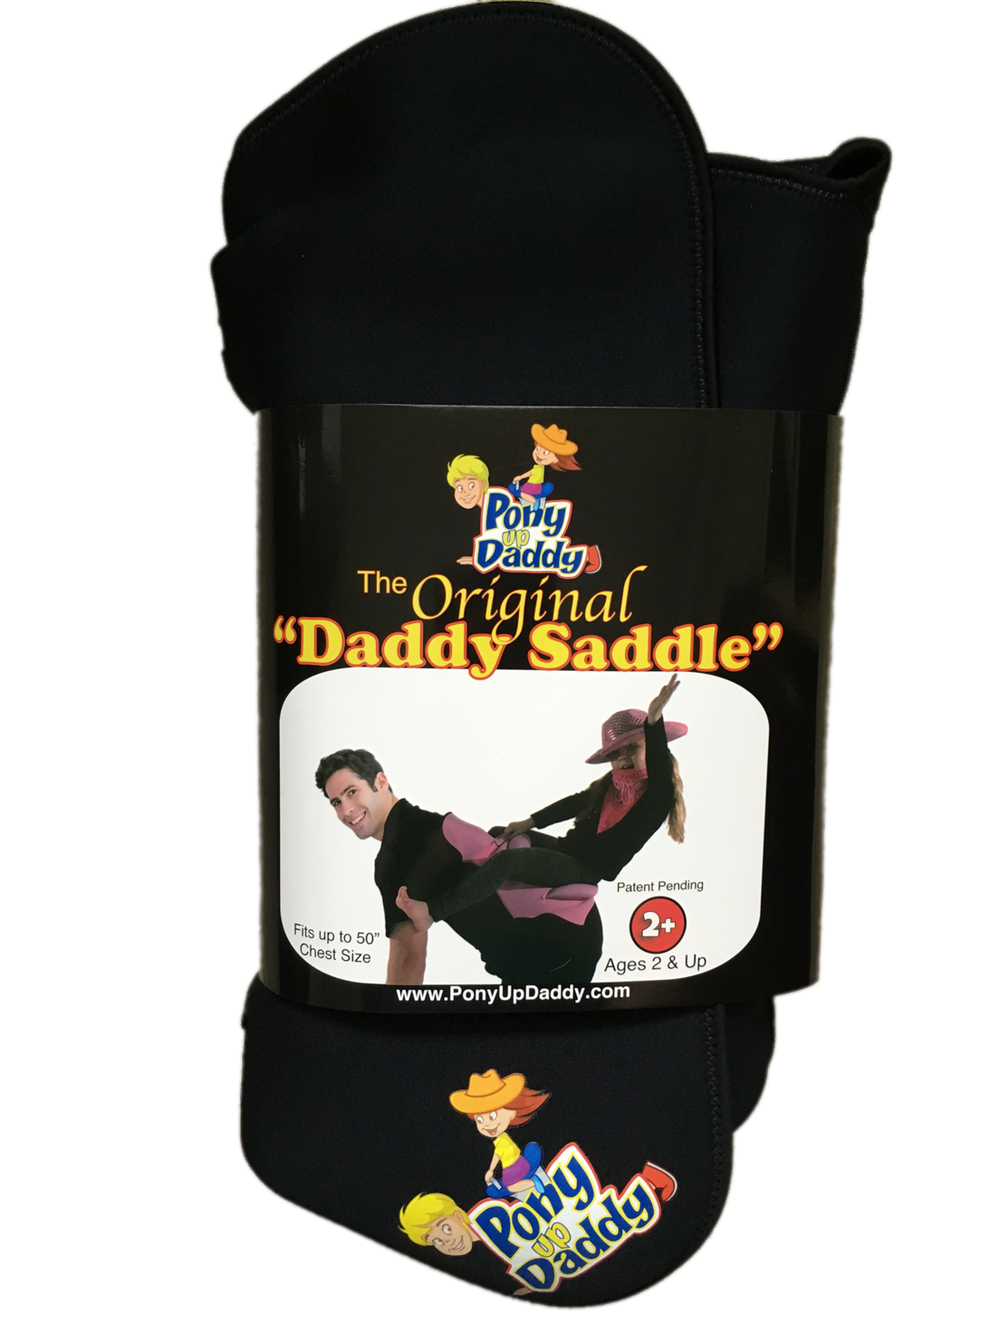 Pony Up Daddy Saddles The Original Daddy Saddle